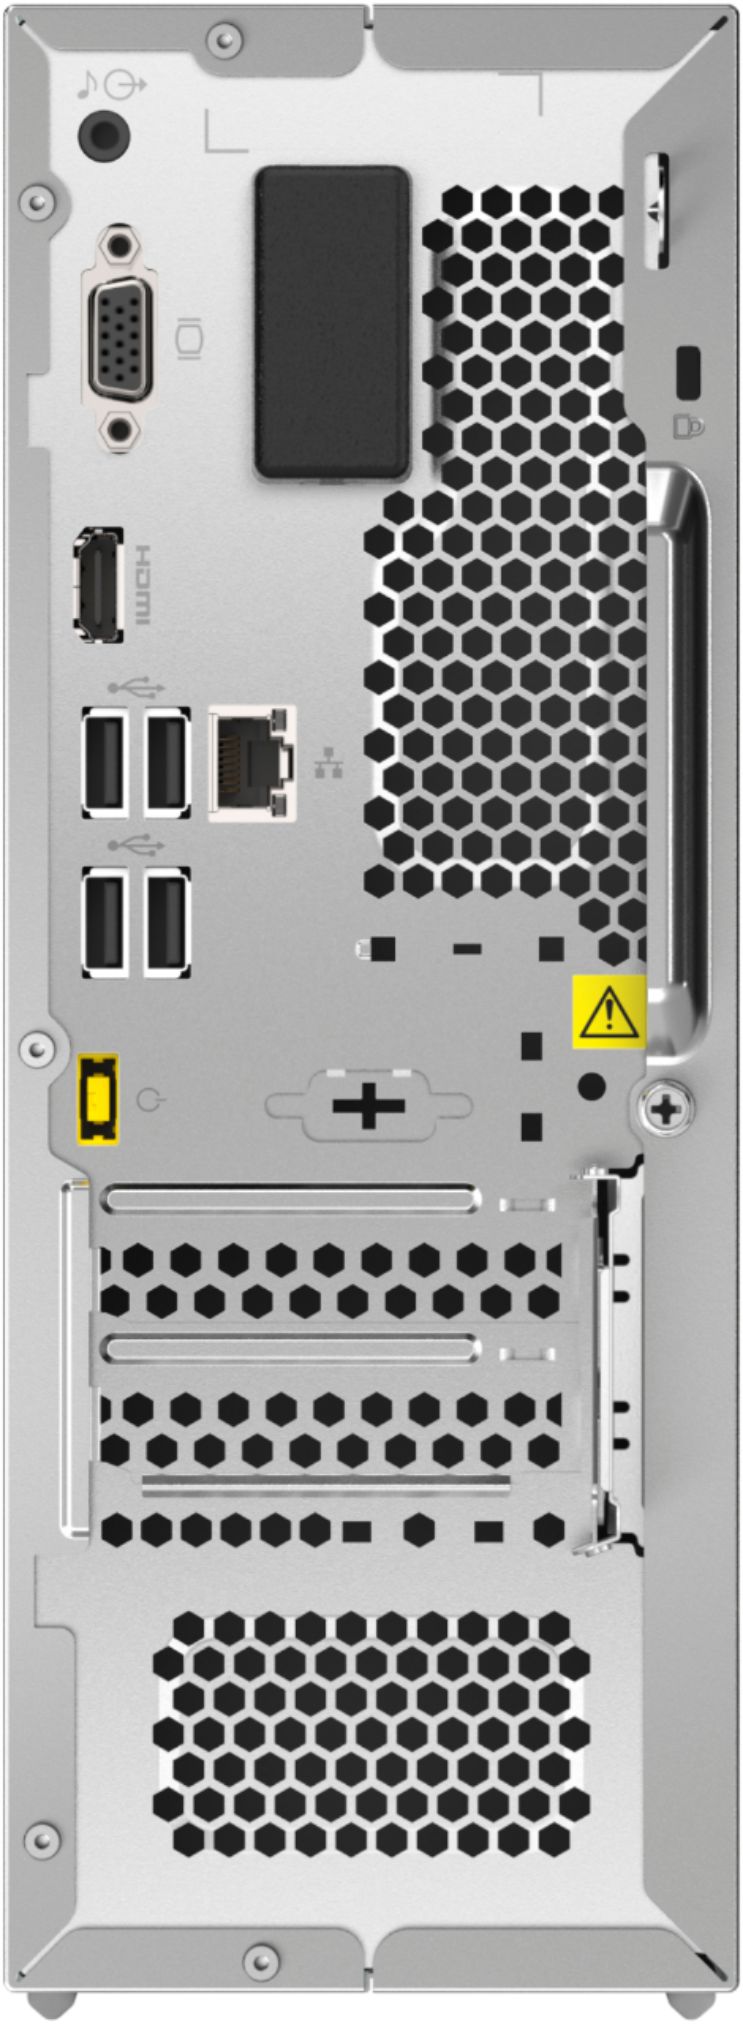 Back View: GIGABYTE - B450M DS3H (Socket AM4) USB 3.1 Gen 1 AMD Motherboard with LED Lighting